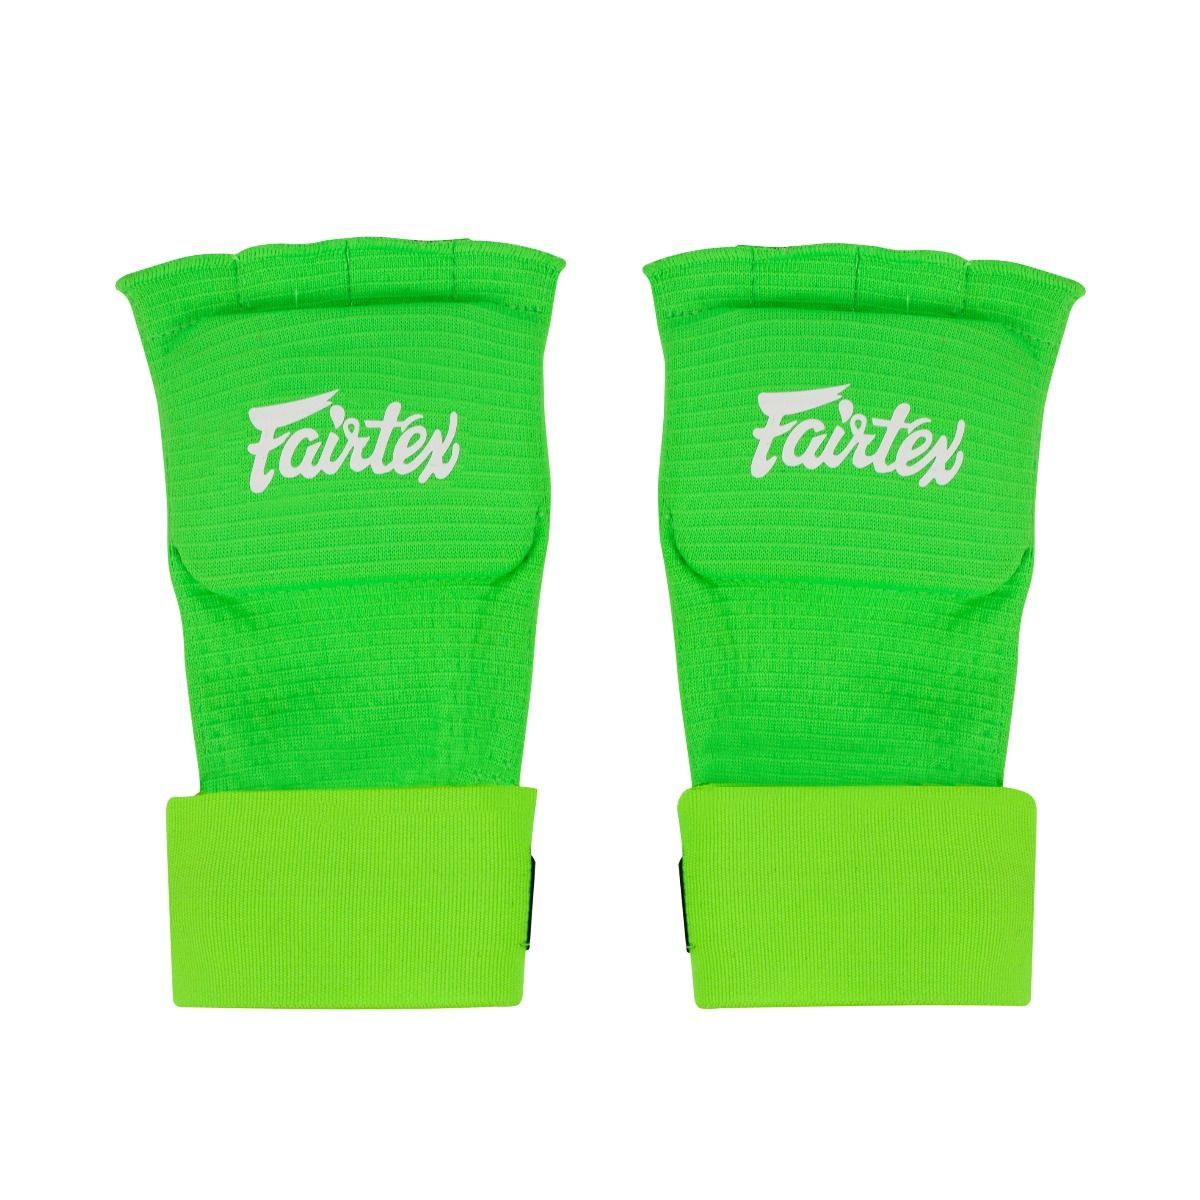 Fairtex HW3 Green Quick Wraps - Nak Muay Training - Muay tHAI